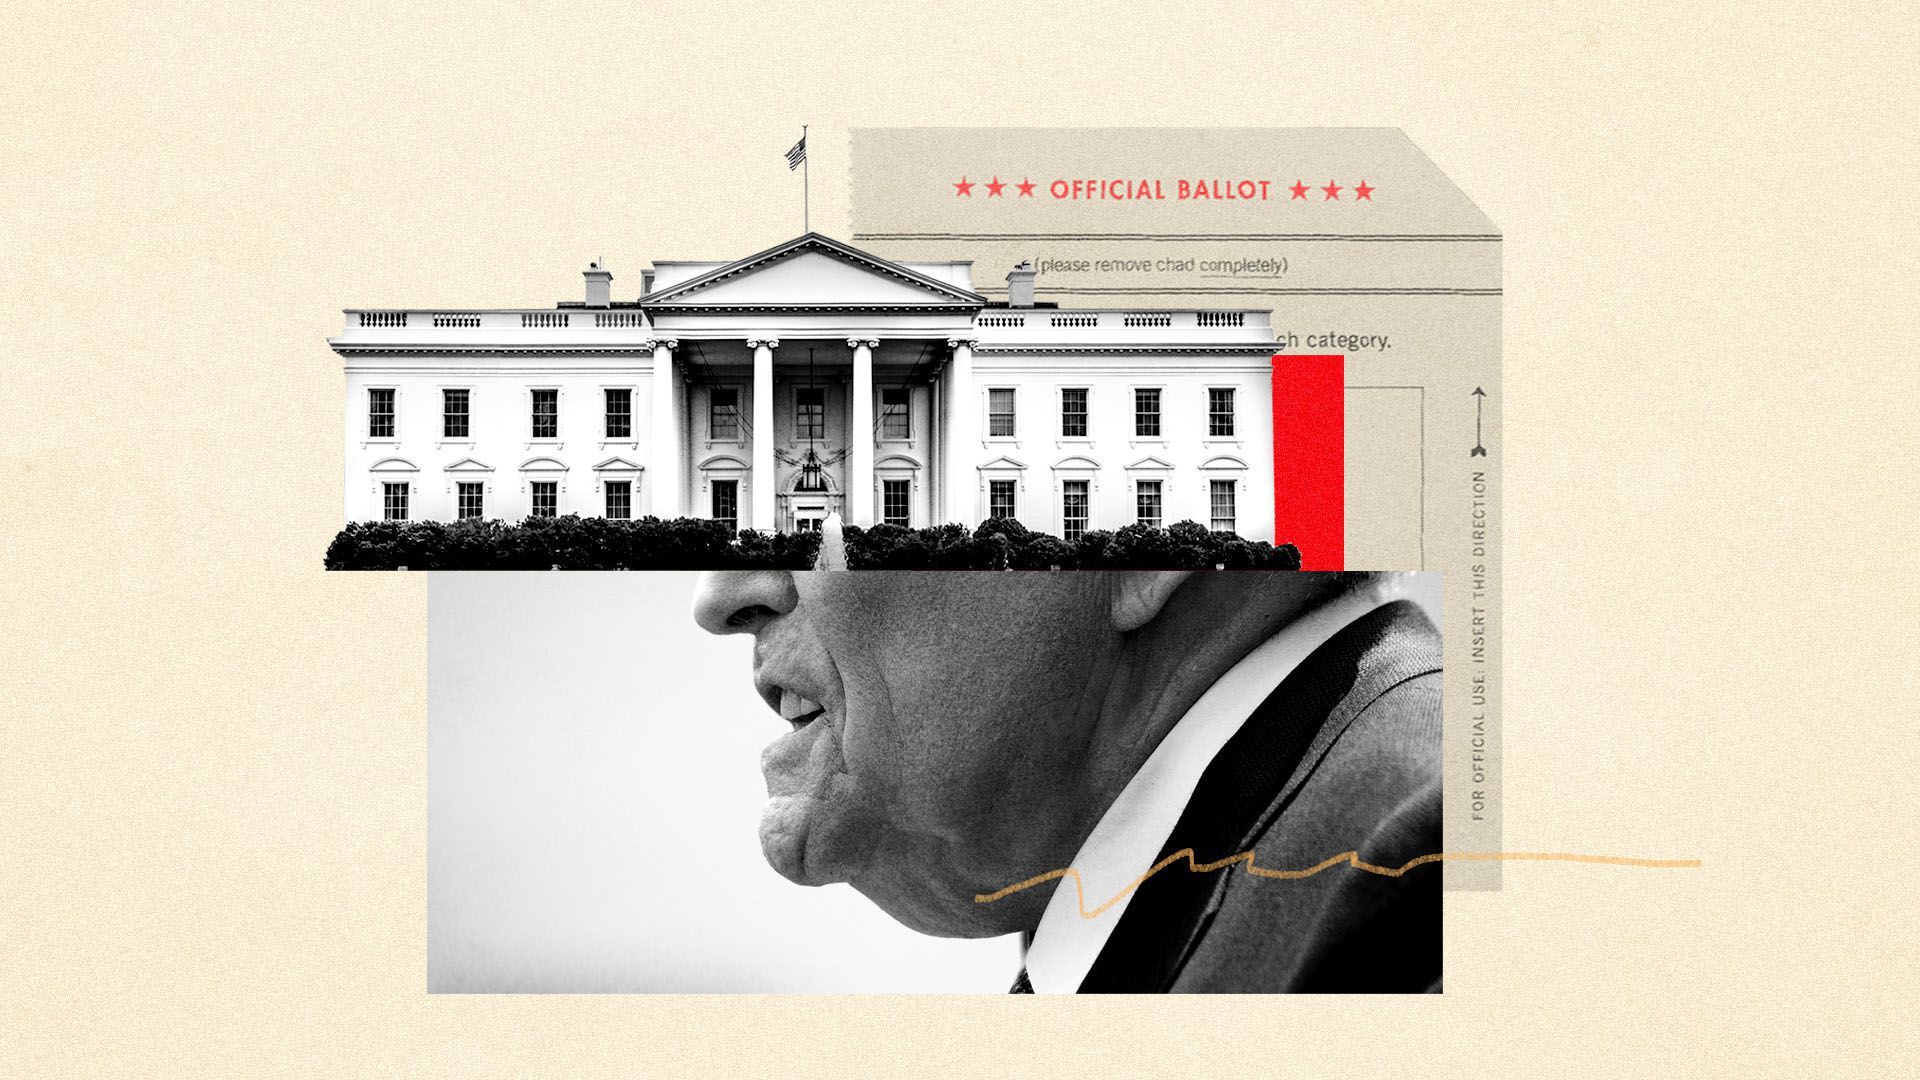 Rudy Giuliani and the White House